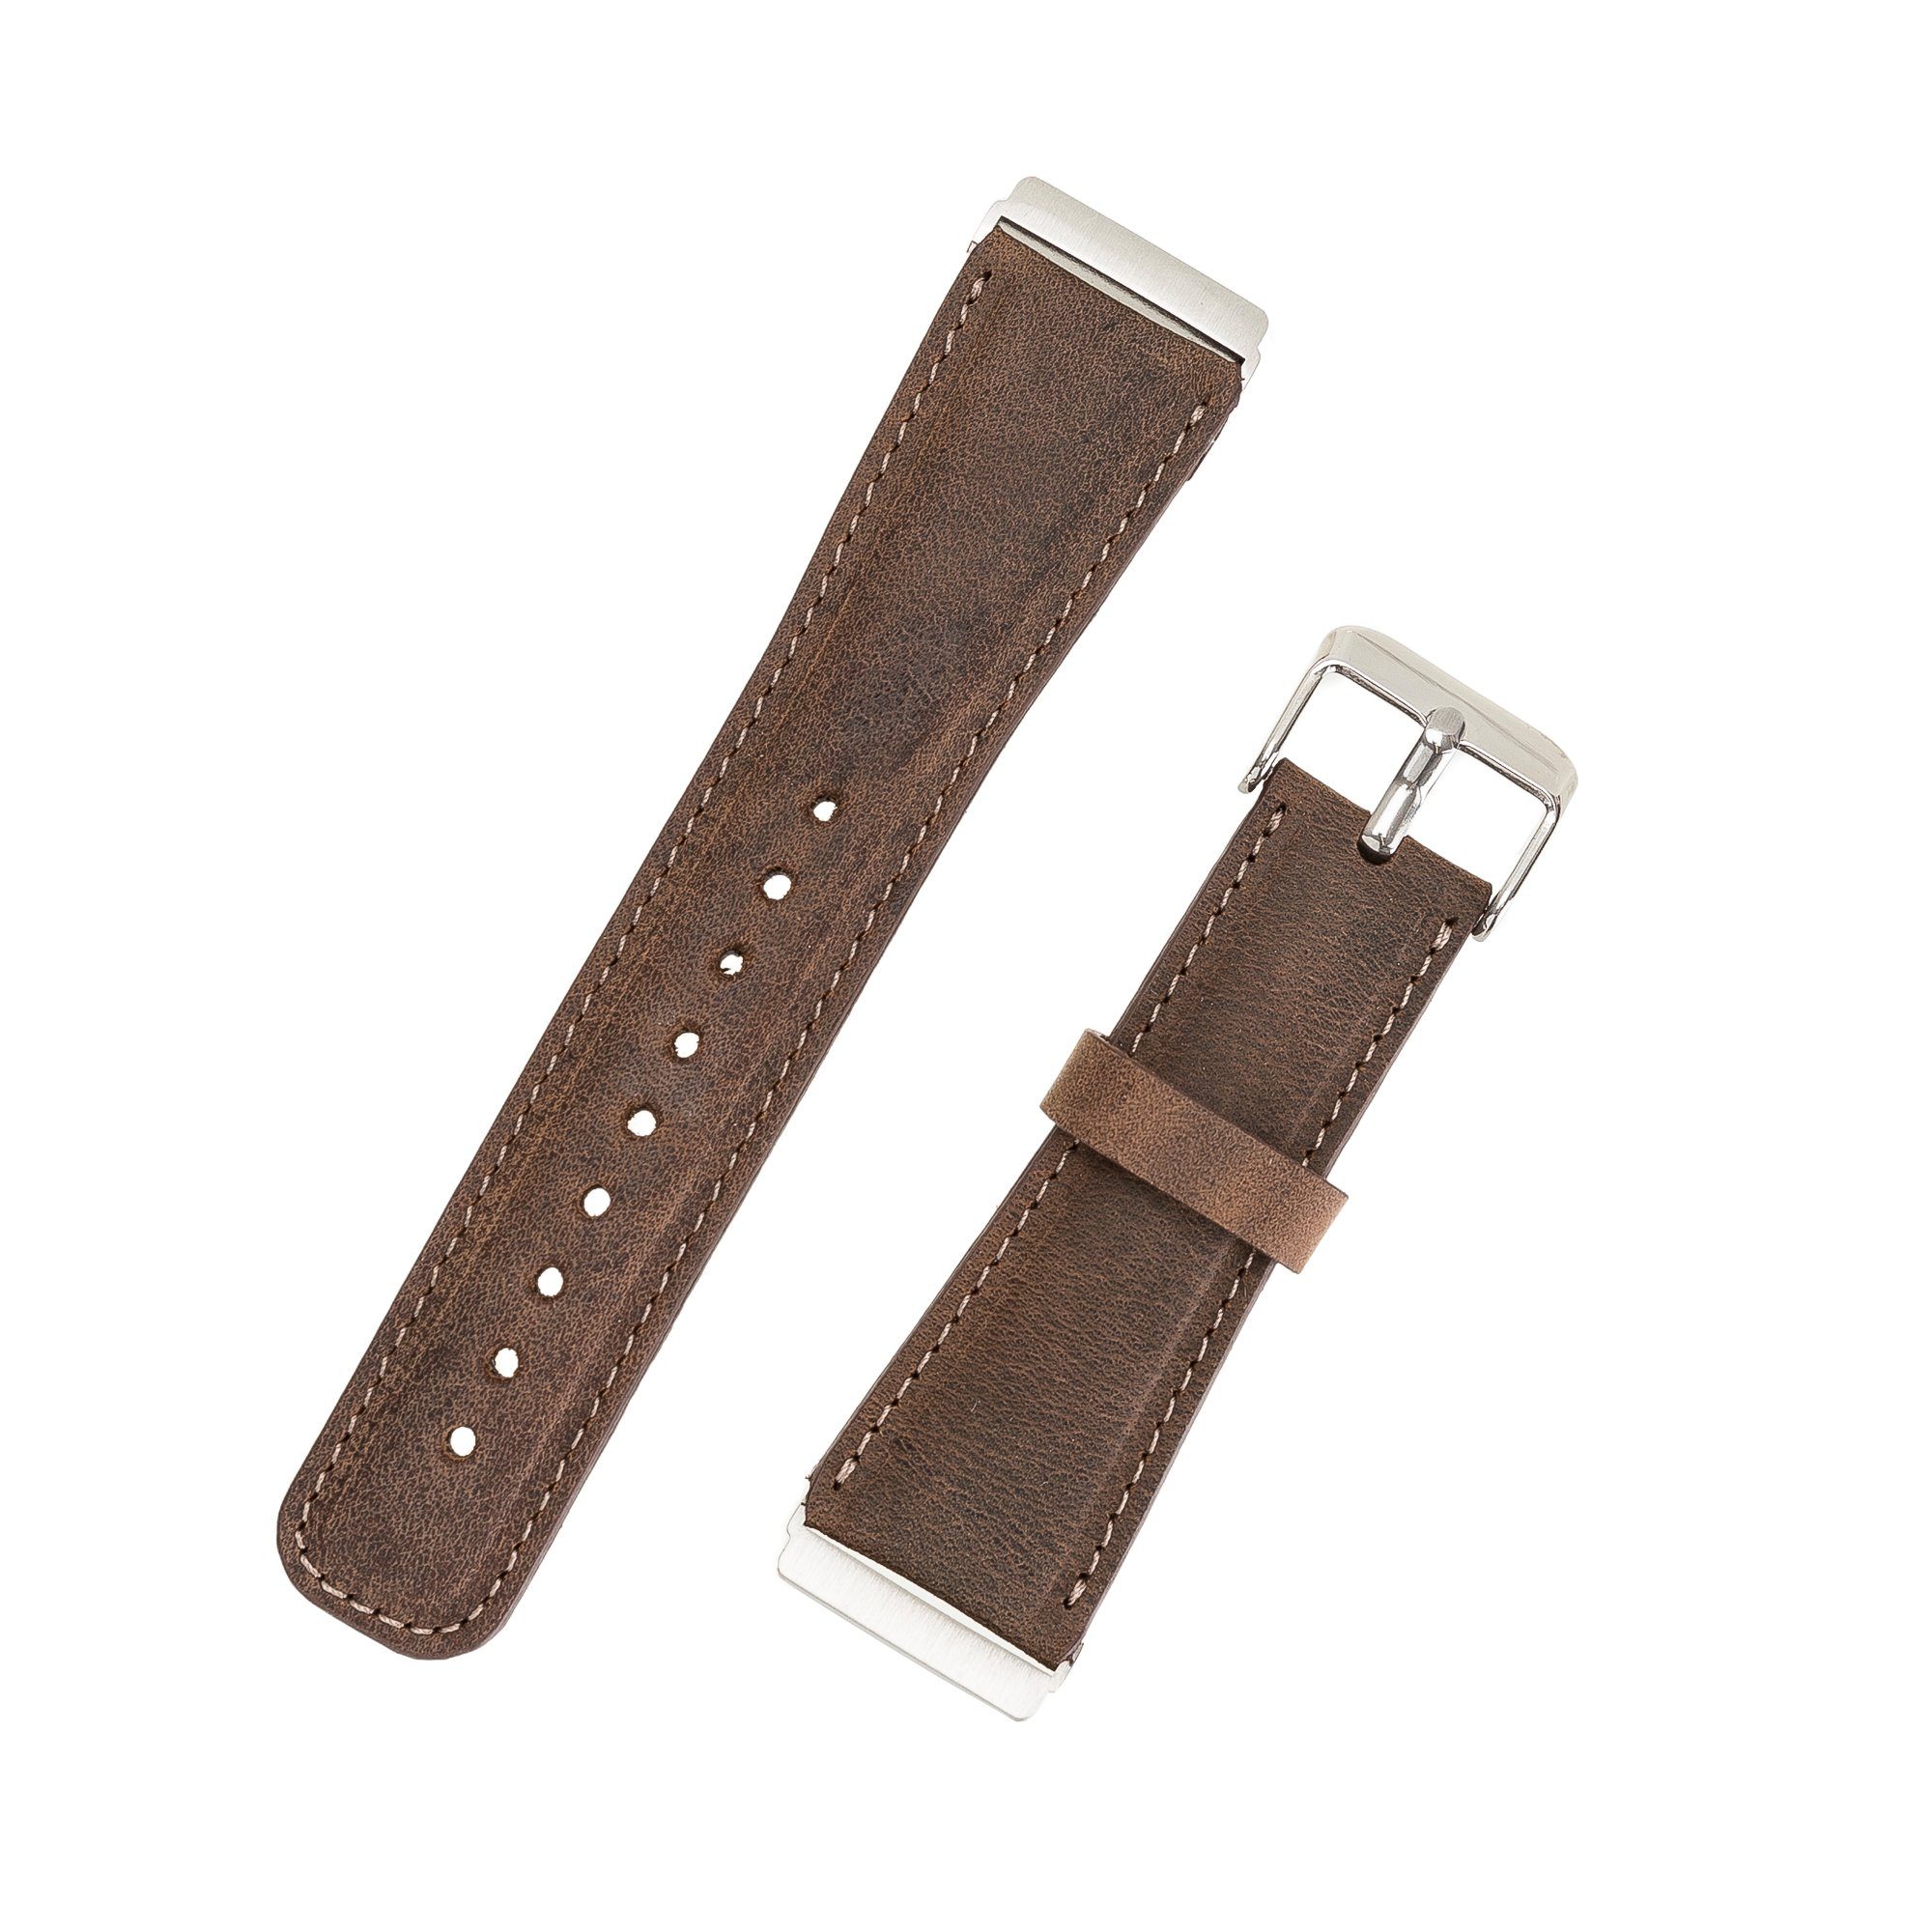 Leather & Sense 4 Renna / 2 Matt Leder 3 Armband Smartwatch-Armband / Braun Echtes Versa Fitbit Ersatzarmband